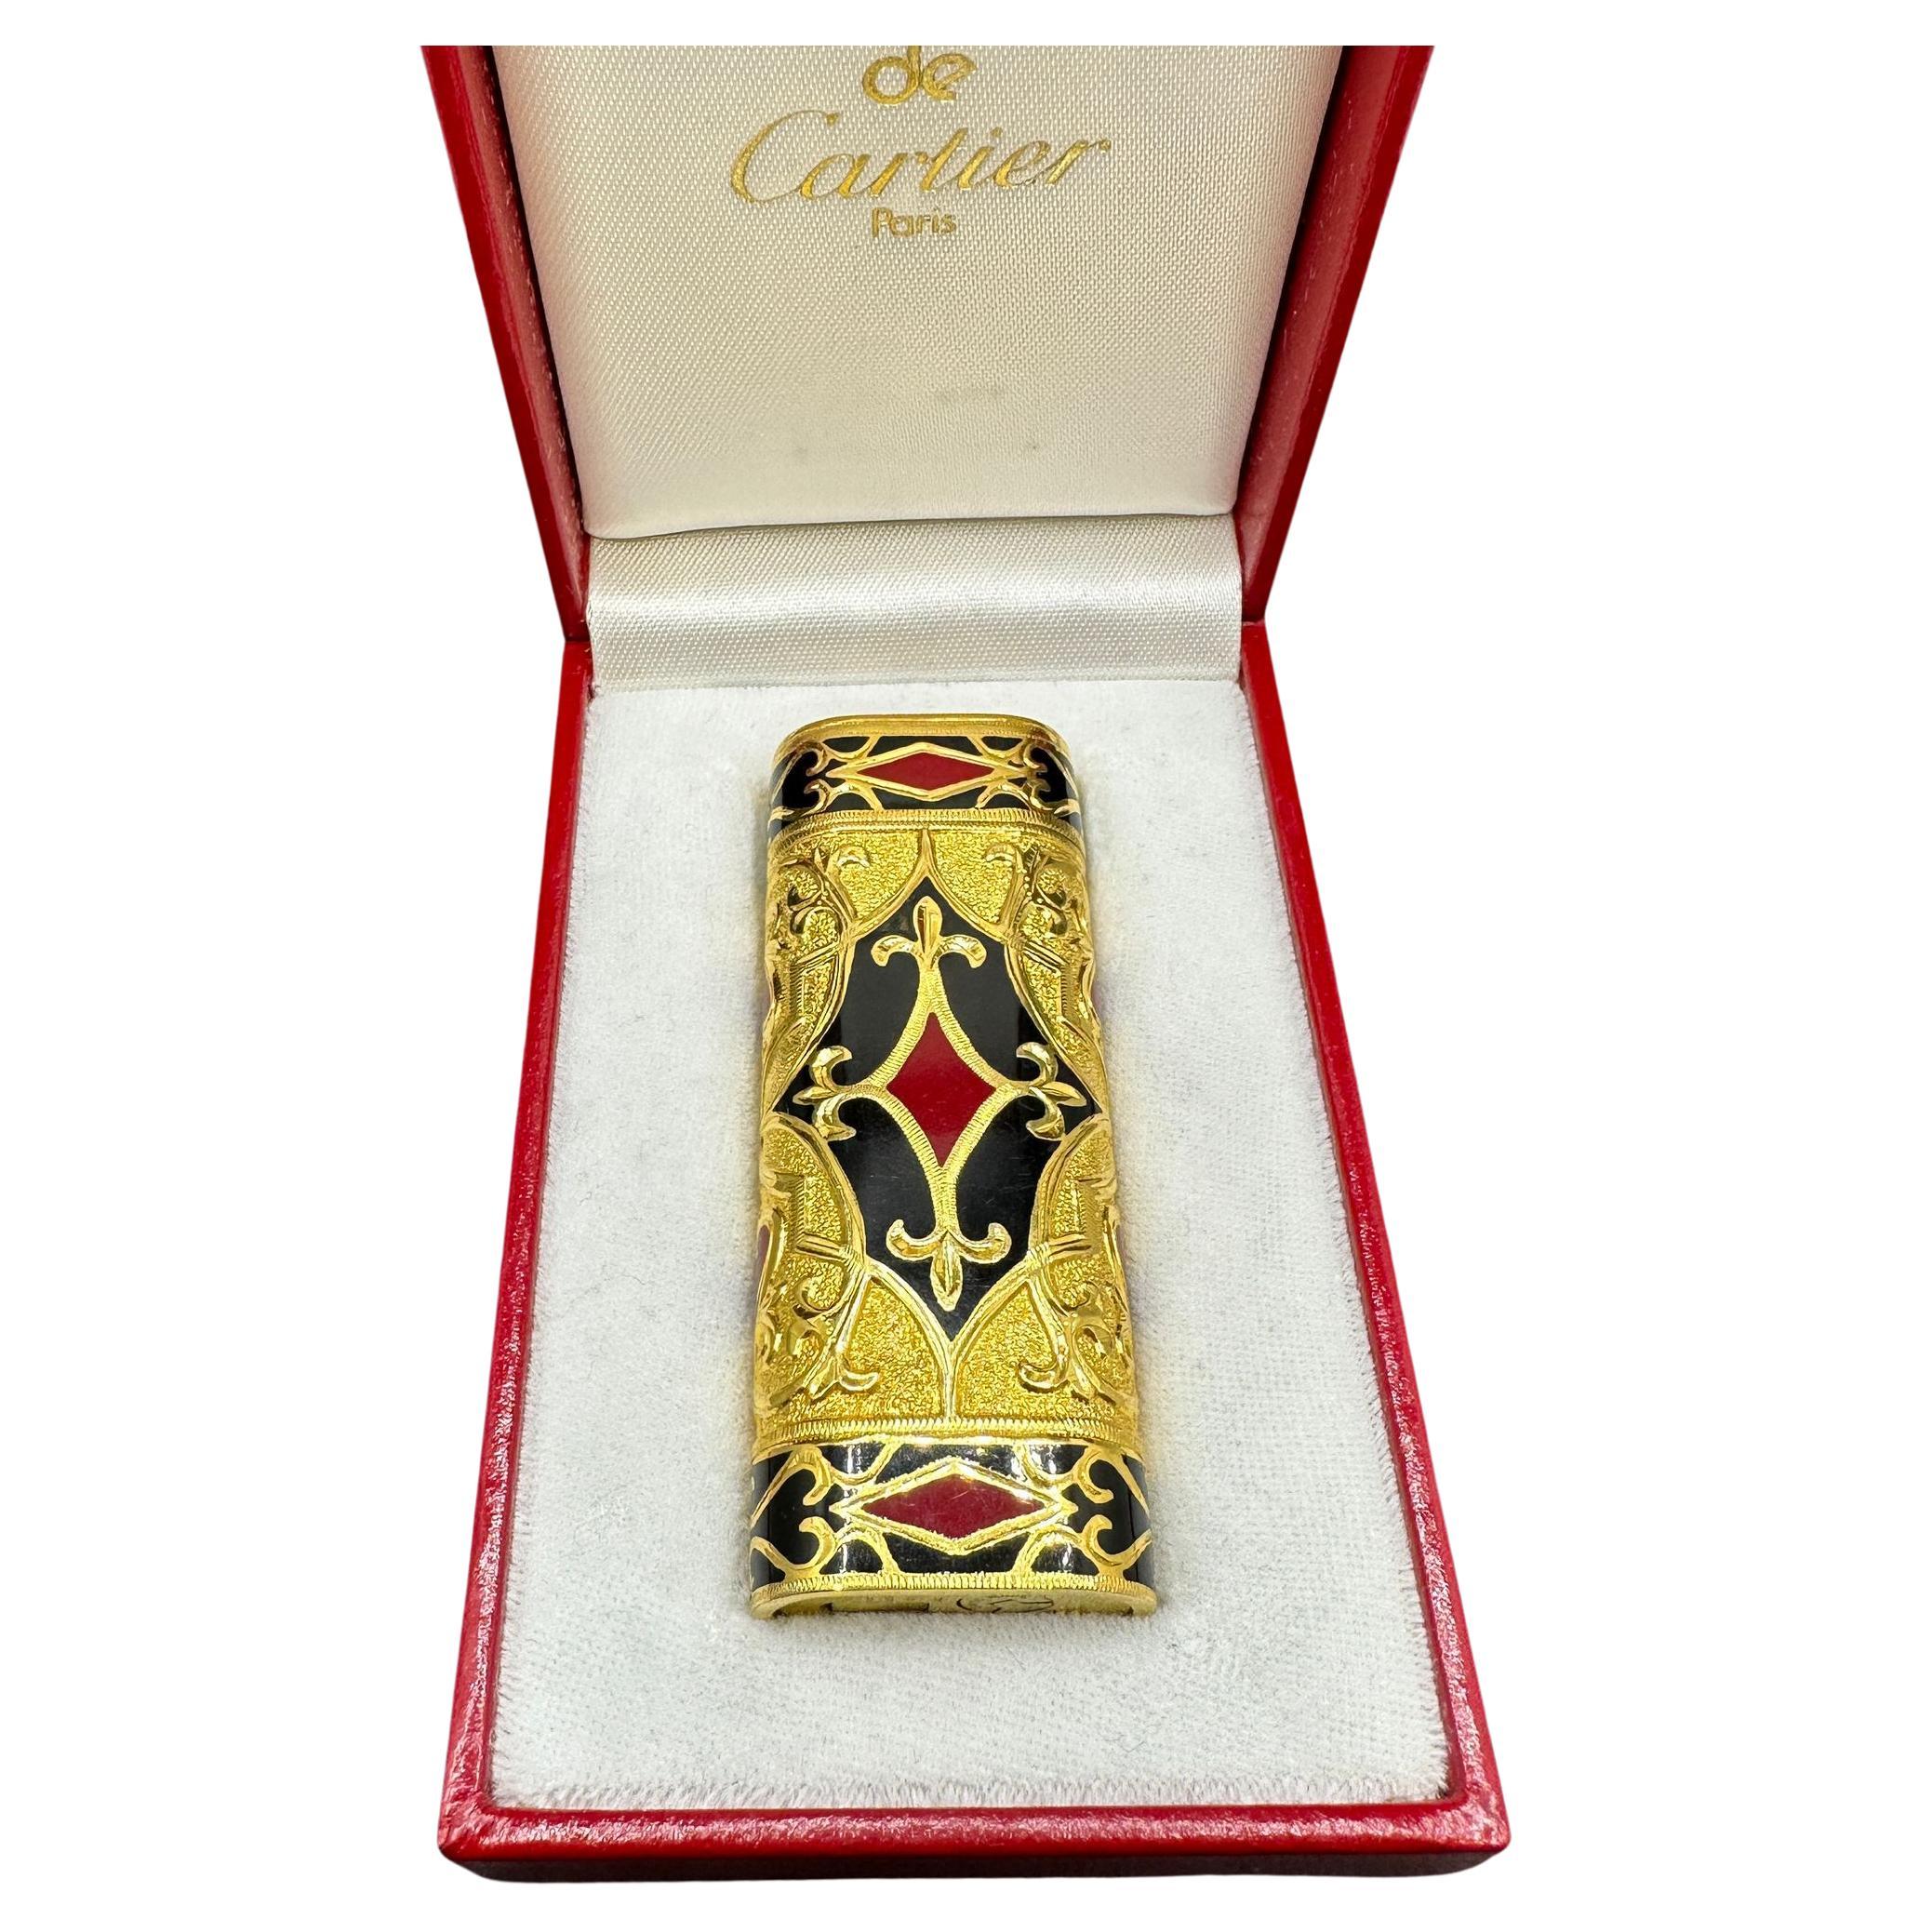 Le Must de Cartier Very Rare Royking Lighter, 18k Gold Plating & Lacquer